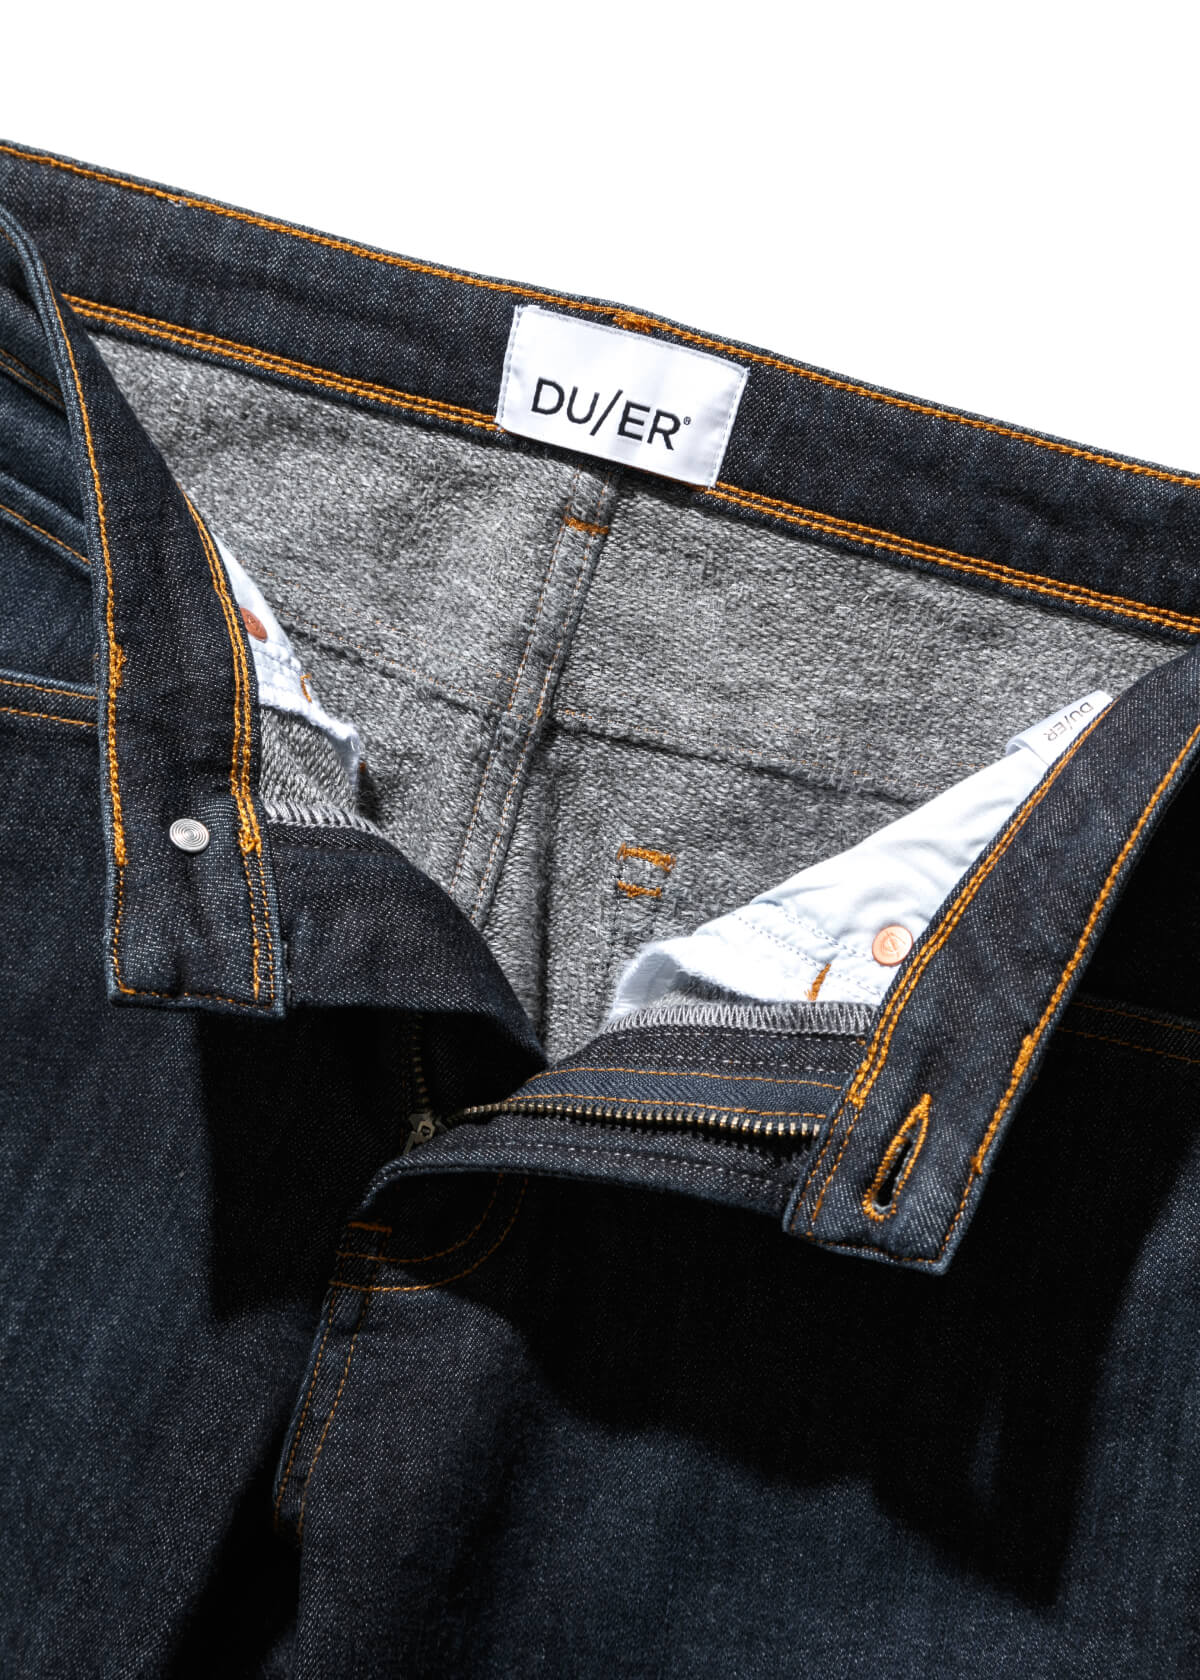 IDEALSANXUN Fleece Lined Jeans Mens Elastic Waist Thicken Warm Loose Denim  Pants(Dark Blue/Fleece, 32) at Amazon Men's Clothing store